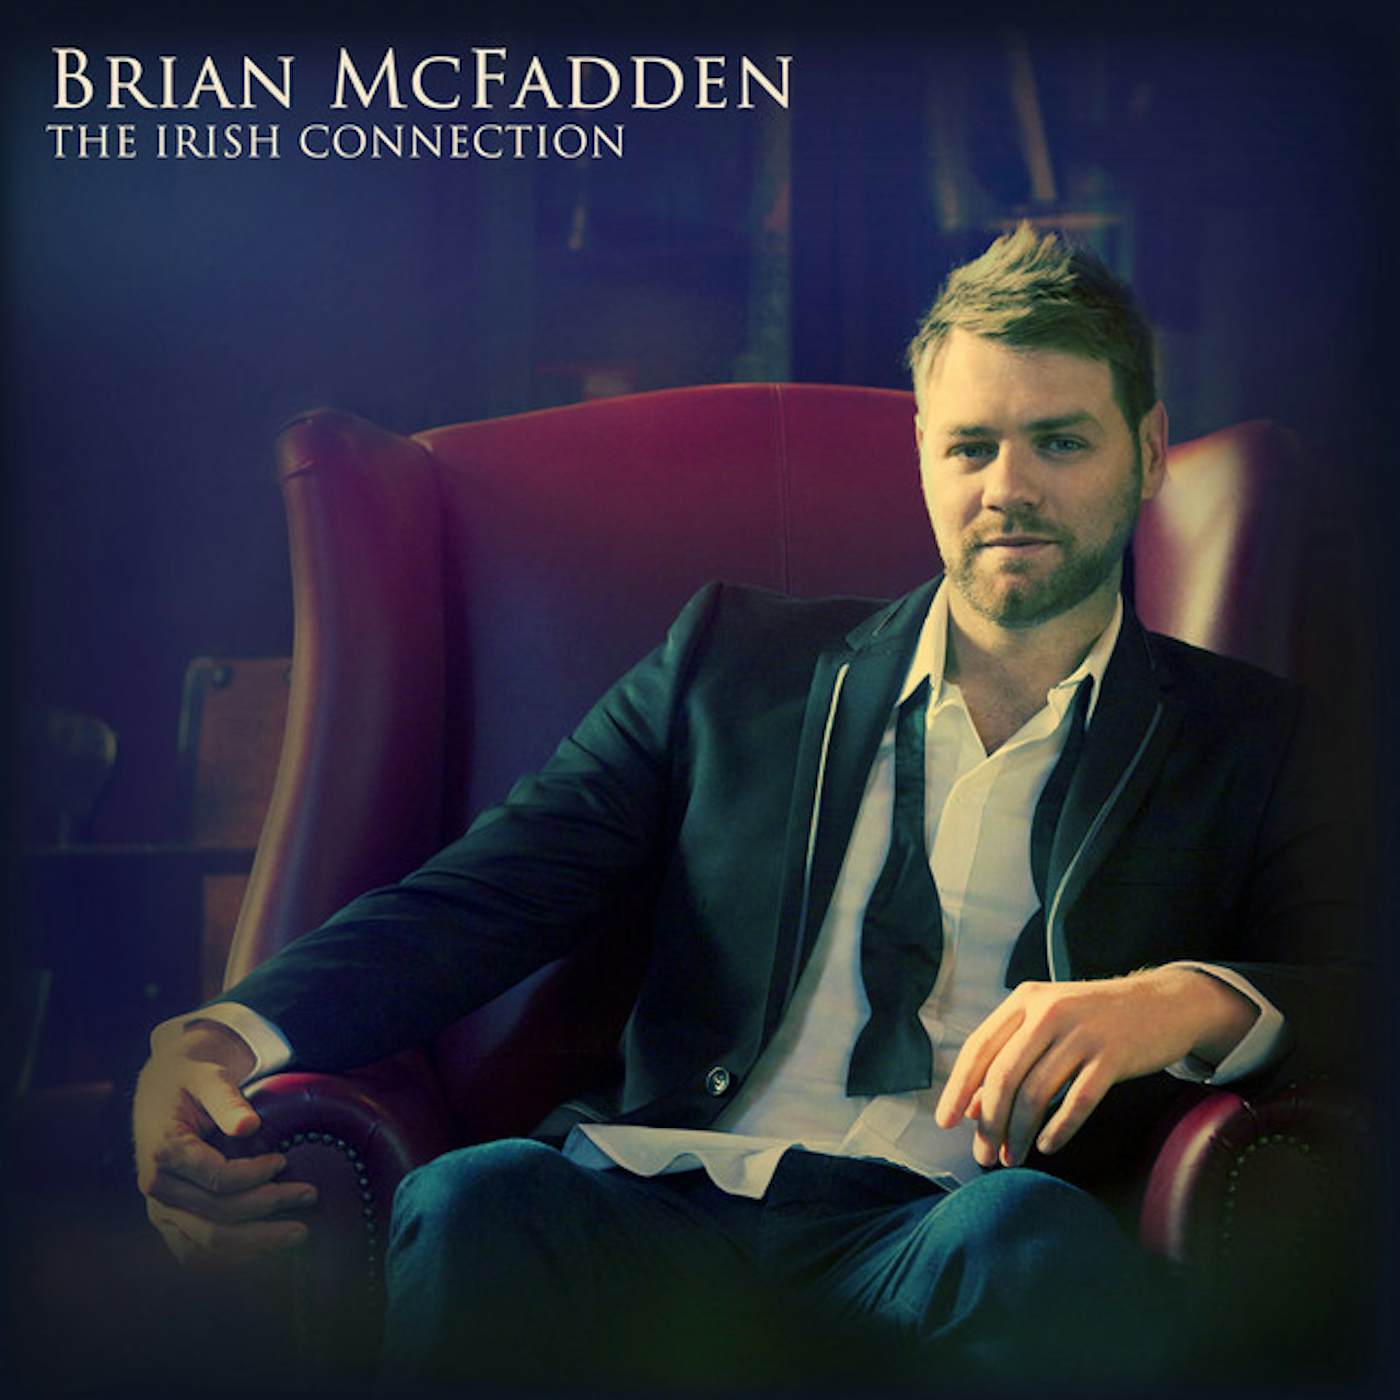 Brian McFadden IRISH CONNECTION CD